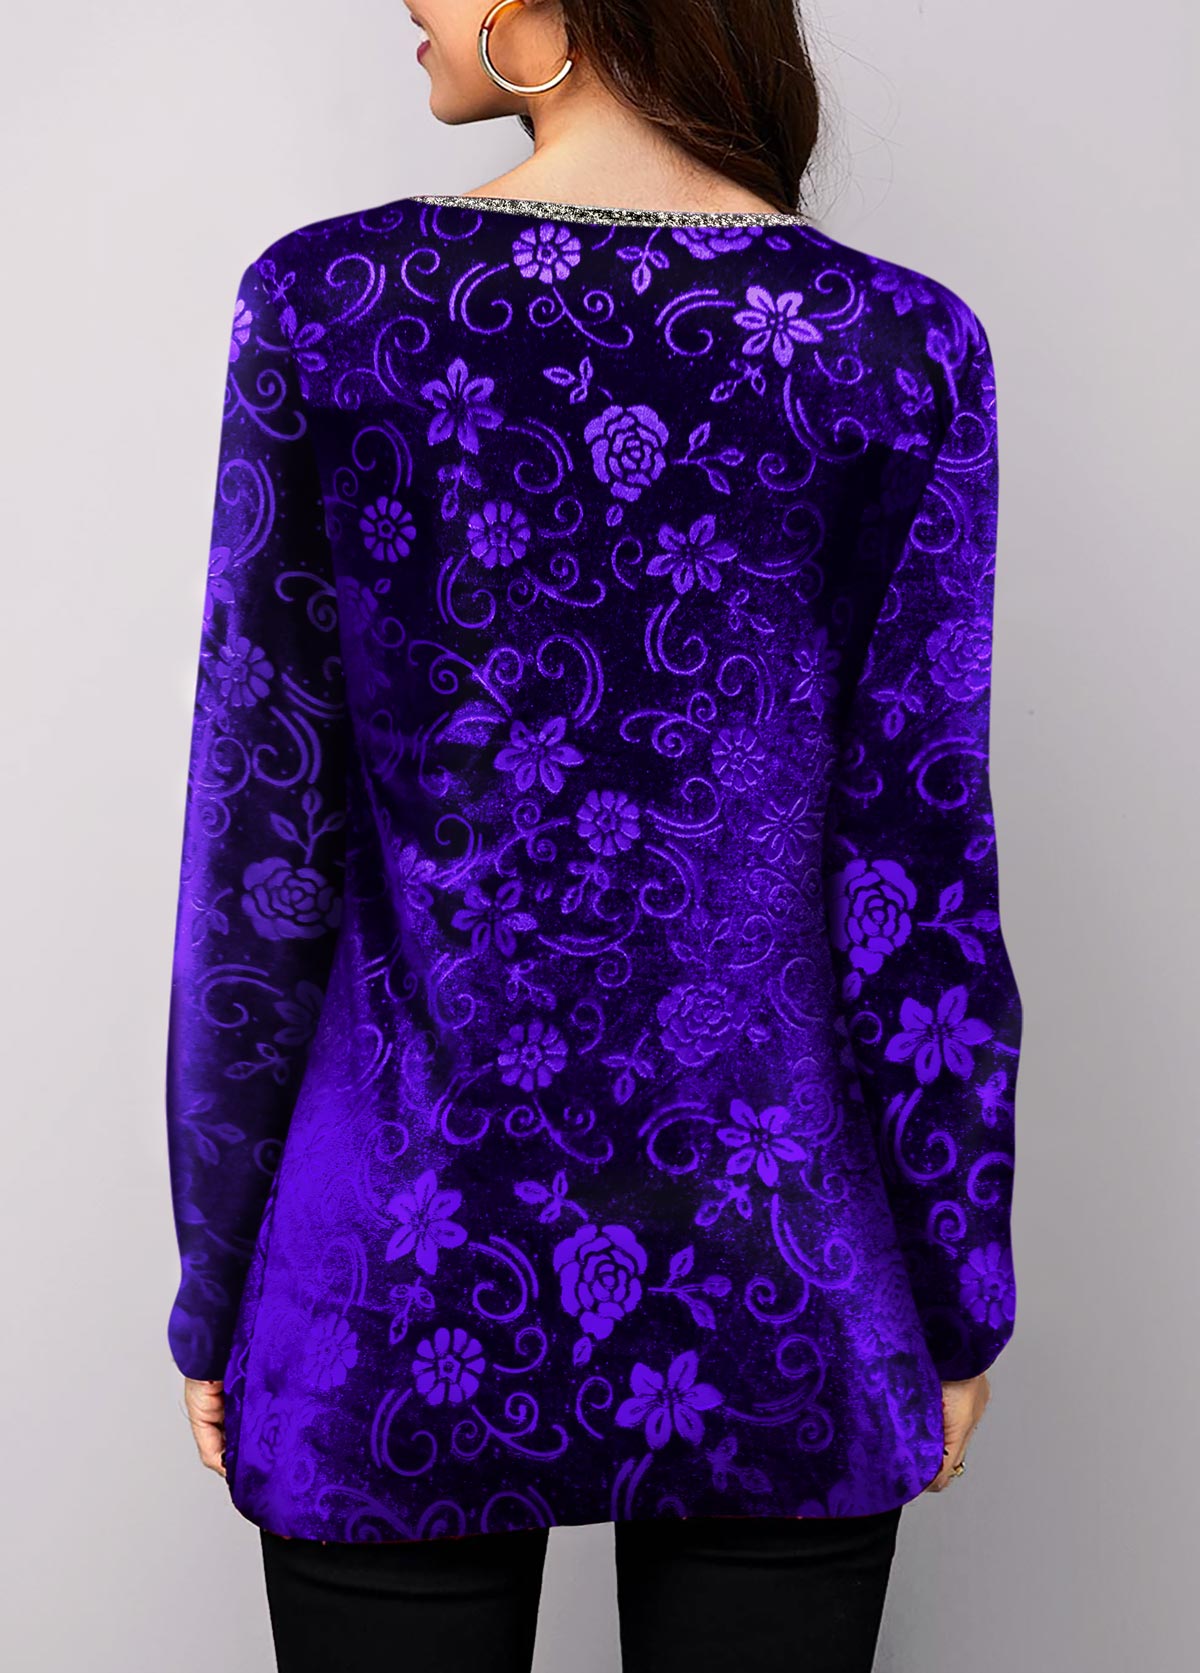 Ditsy Floral Print Purple T Shirt